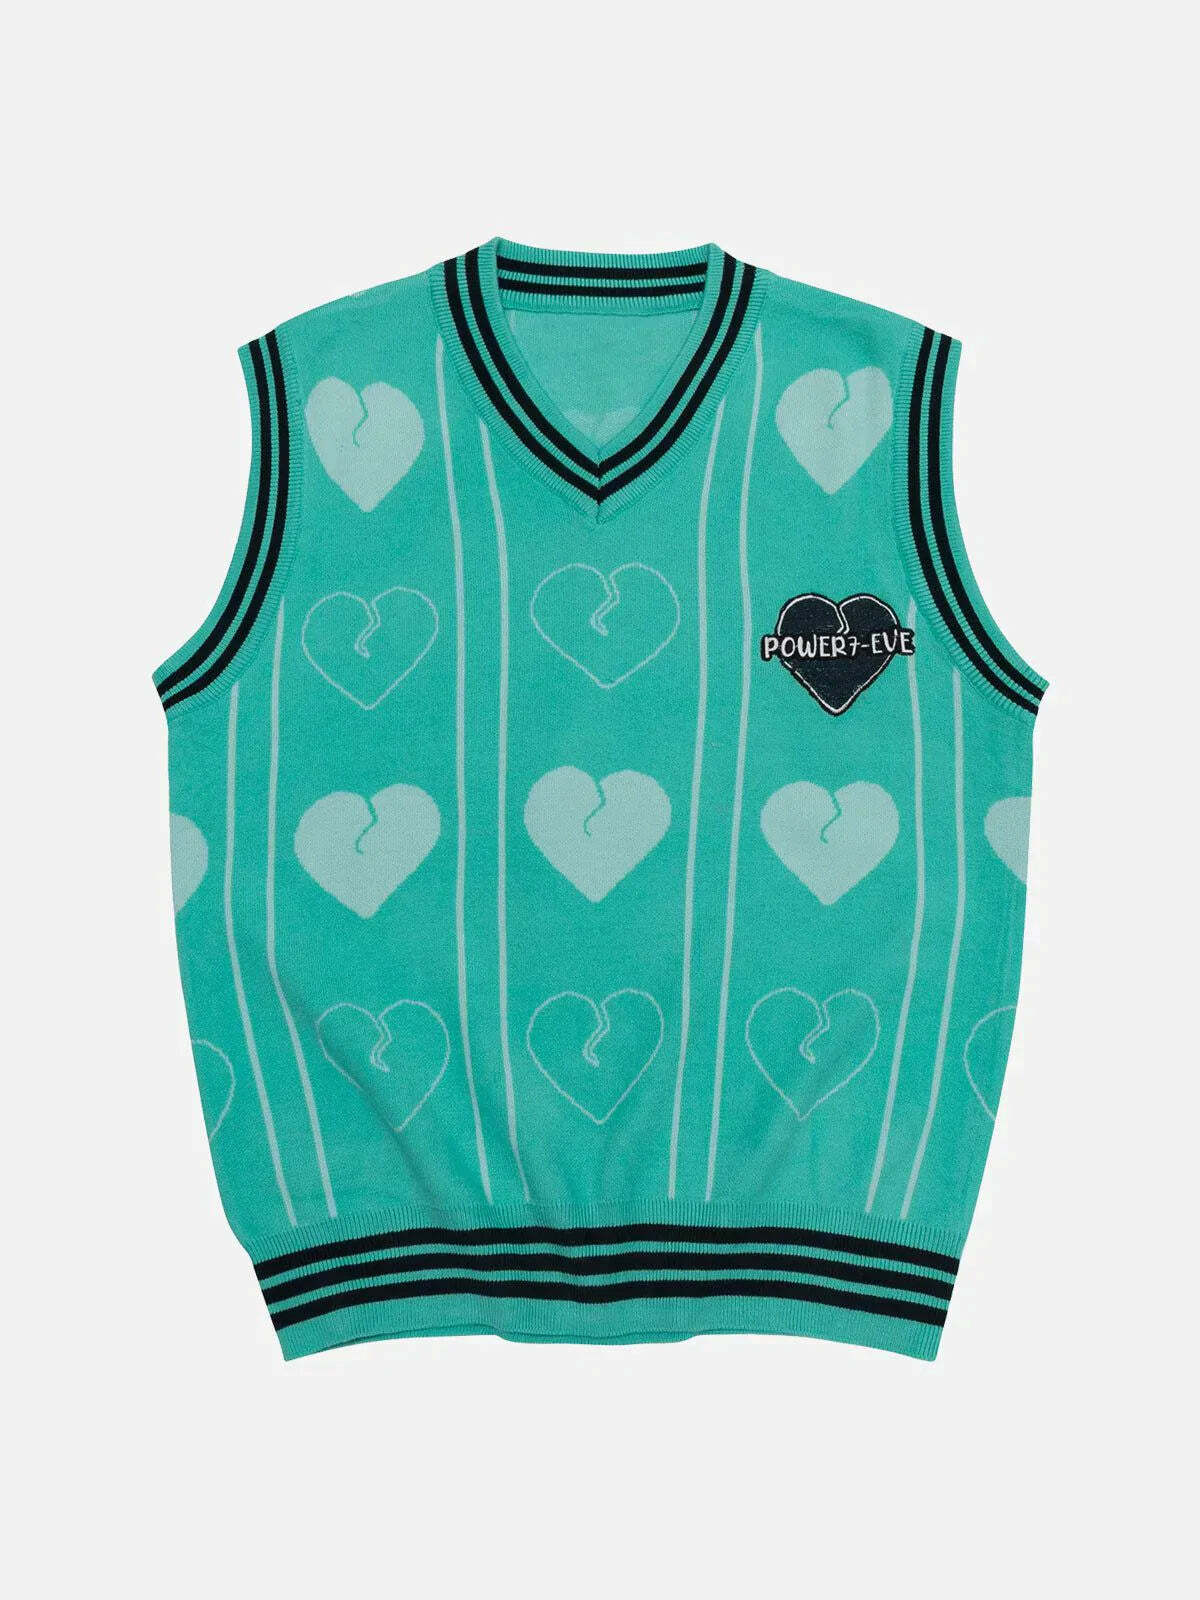 colorblock heart sweater vest edgy & vibrant streetwear 3054